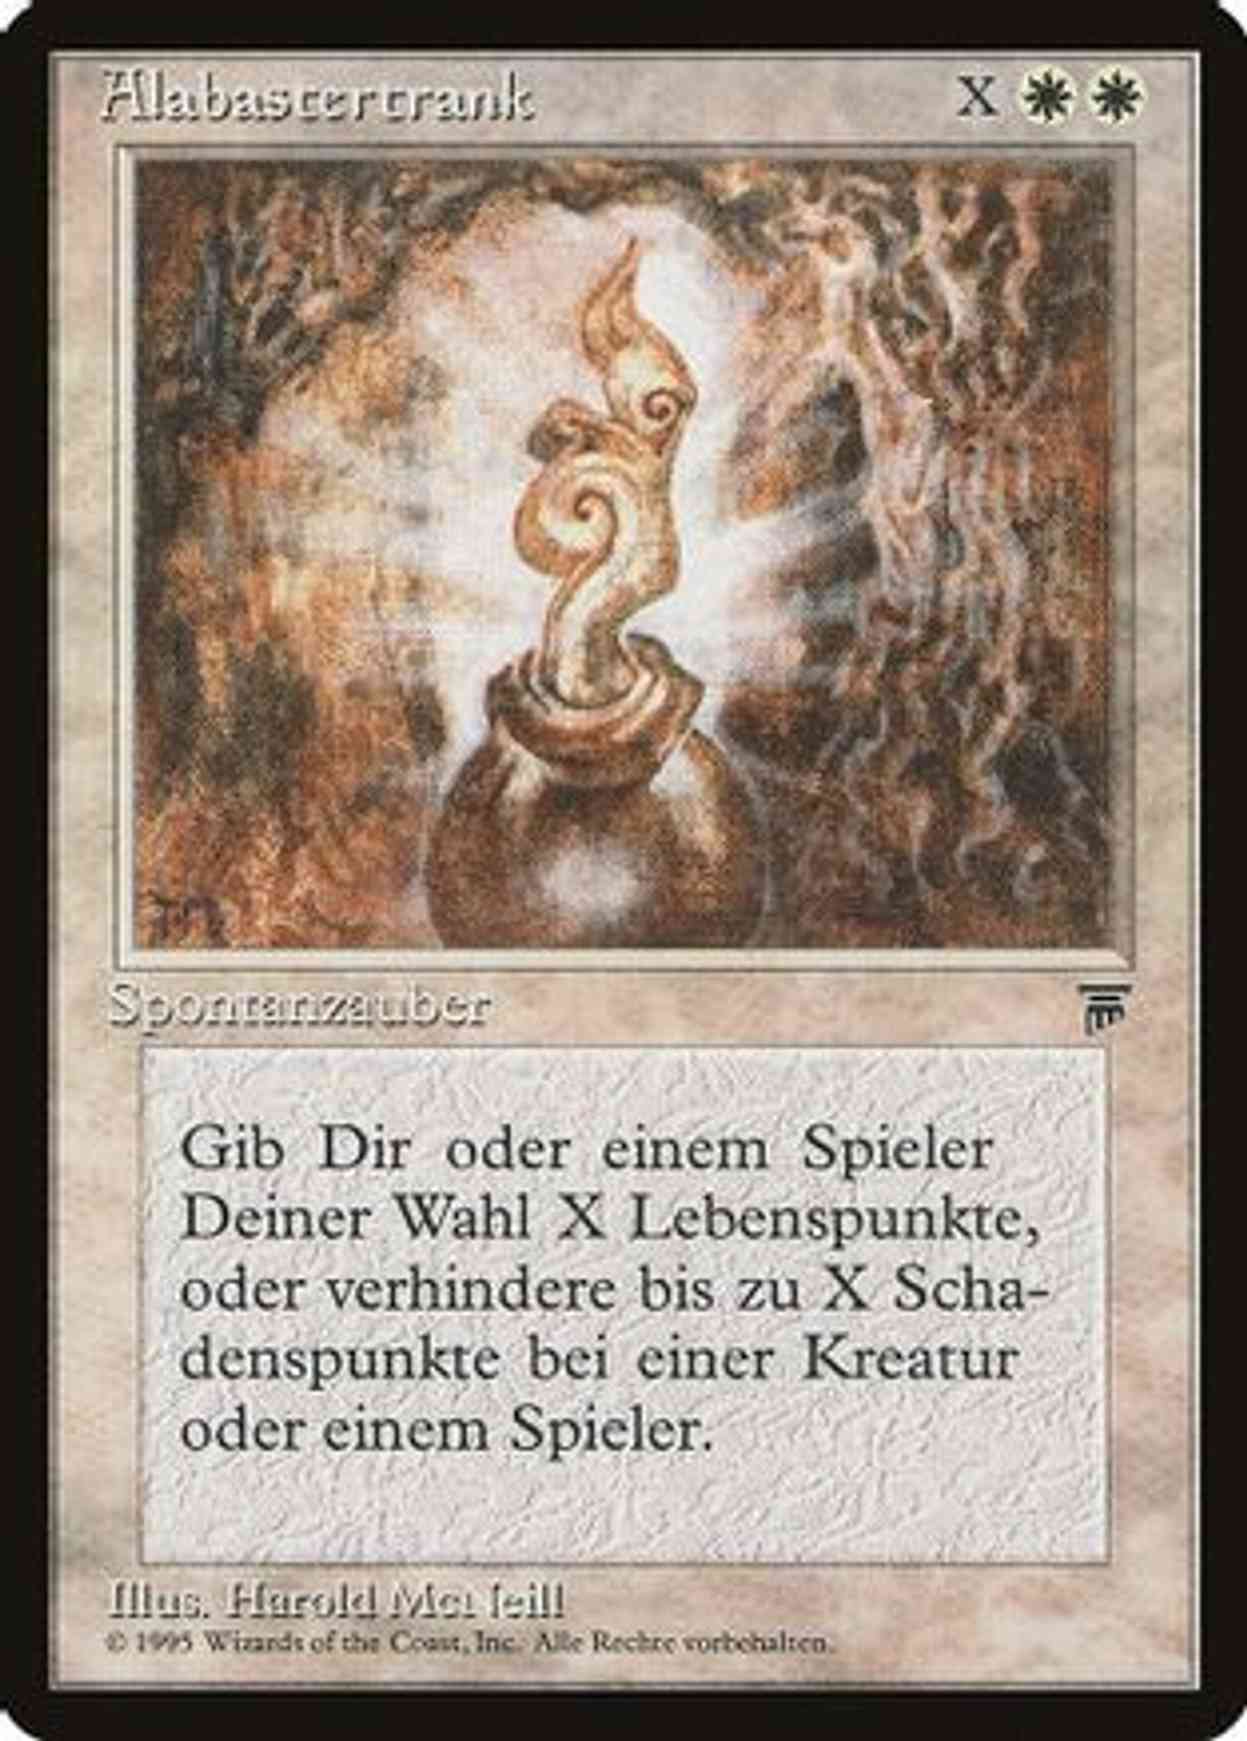 Alabaster Potion (German) - "Alabastertrank" magic card front